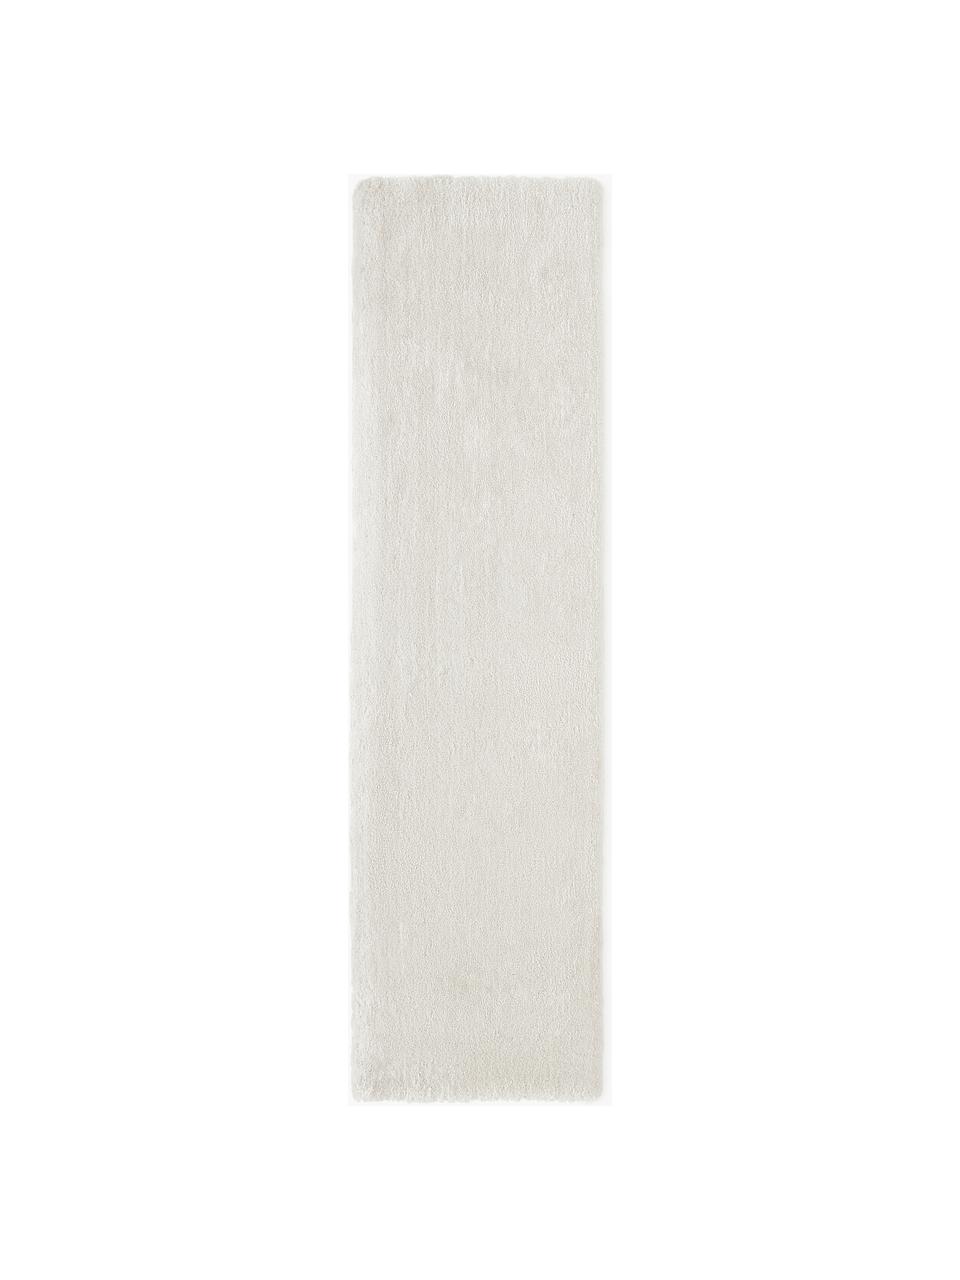 Passatoia morbida a pelo lungo Leighton, Retro: 55% poliestere, 45% coton, Bianco latte, Larg. 80 x Lung. 200 cm